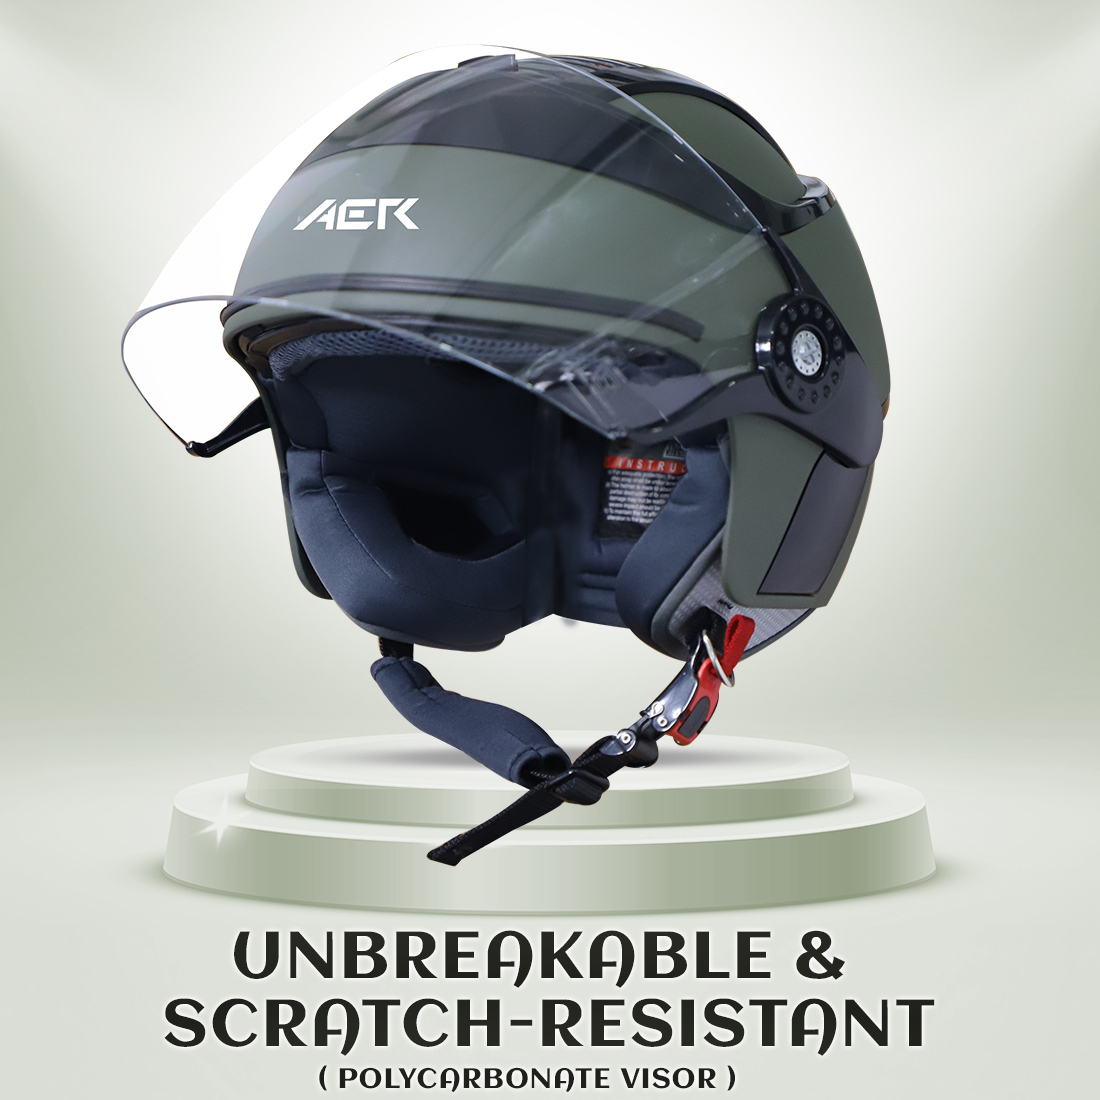 Steelbird SB-29 AER ISI Certified Open Face Helmet For Men And Women (Matt Battle Green With Clear Visor)